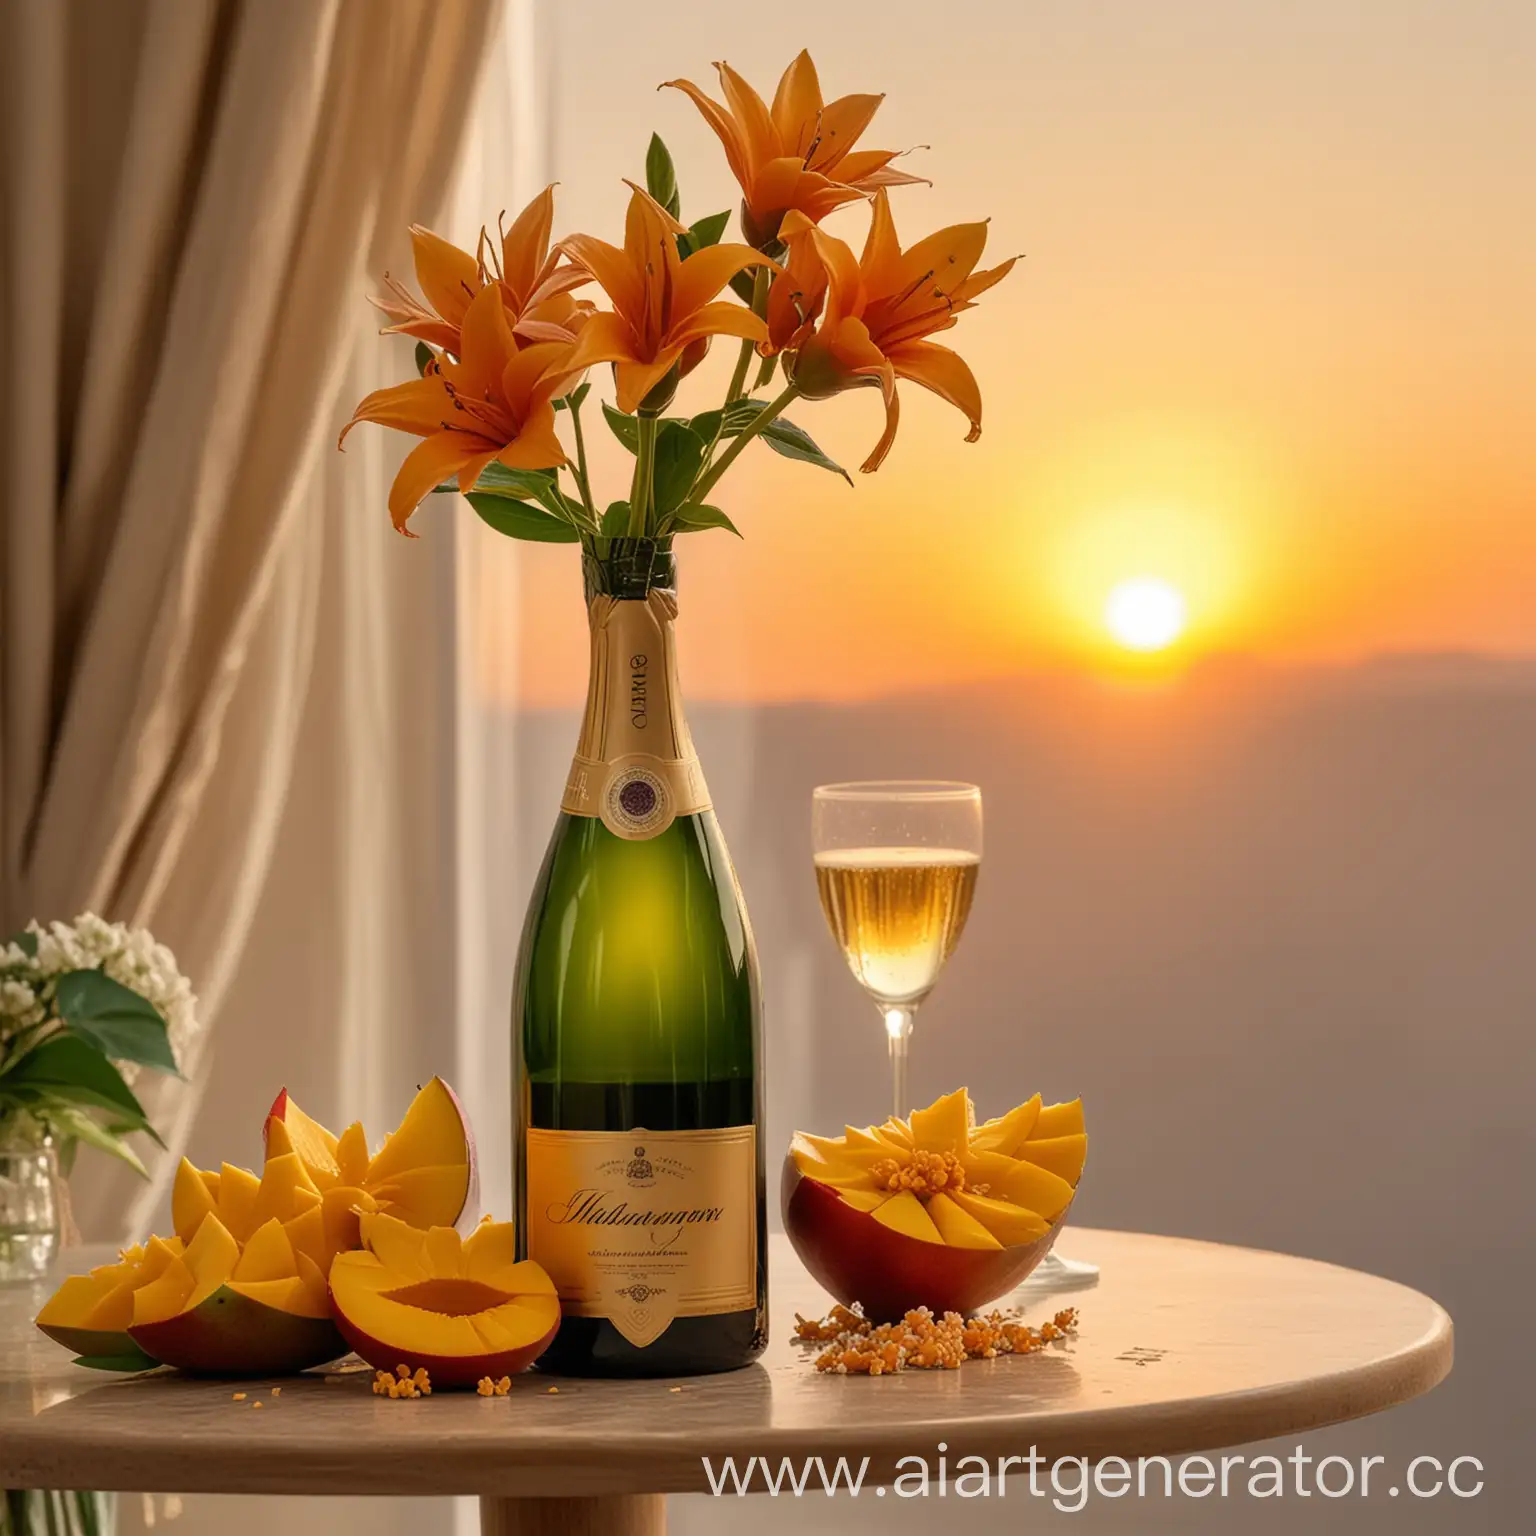 бутылка шампанского, манго кусочками, цветы в вазе, на фоне восхода солнца